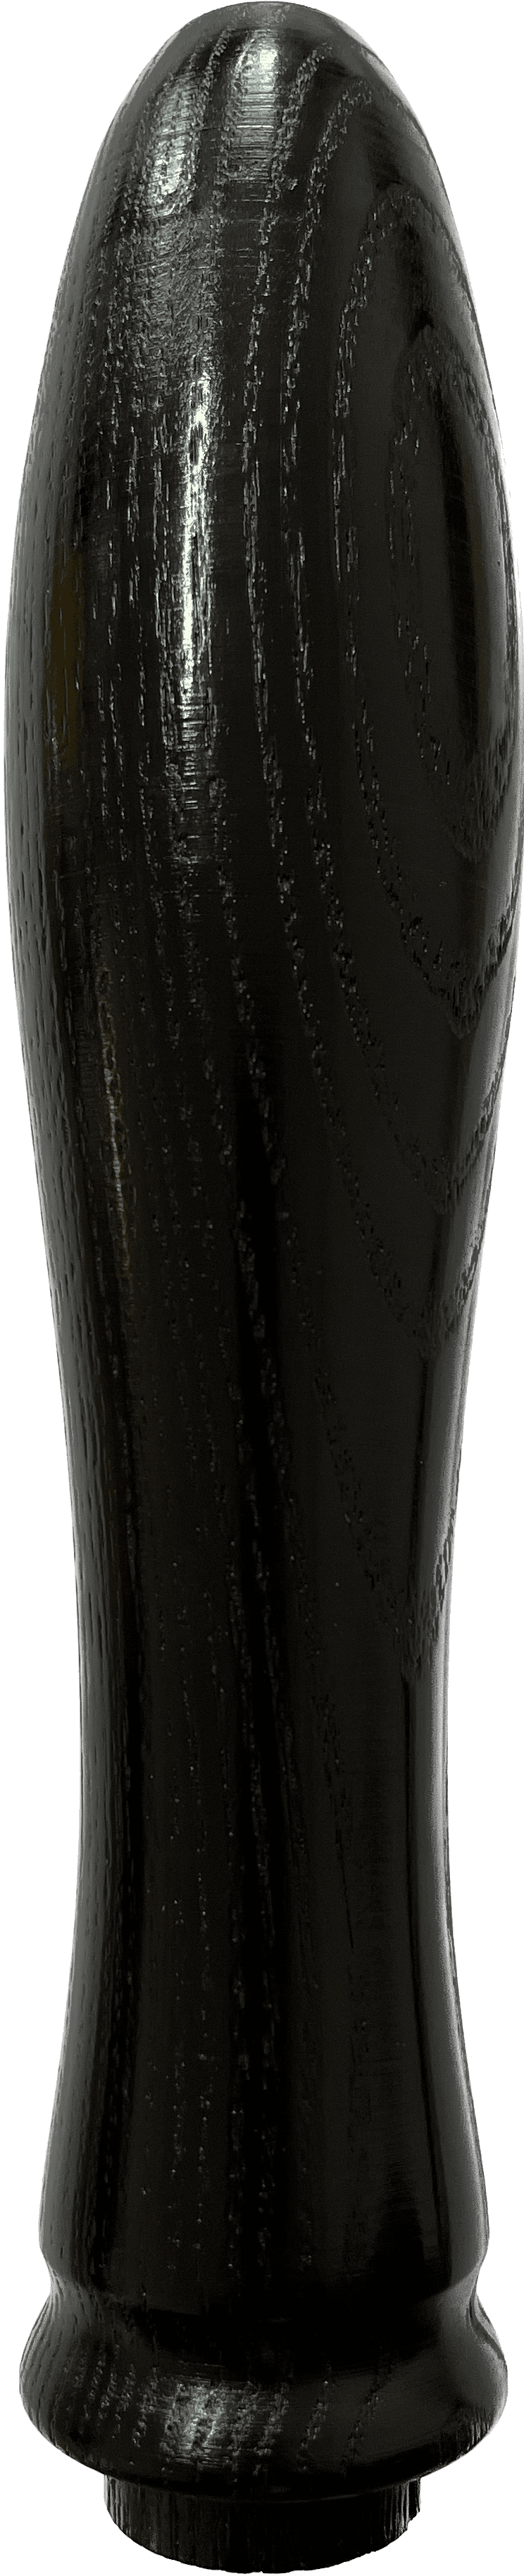 Black Wooden Handle | Pint365